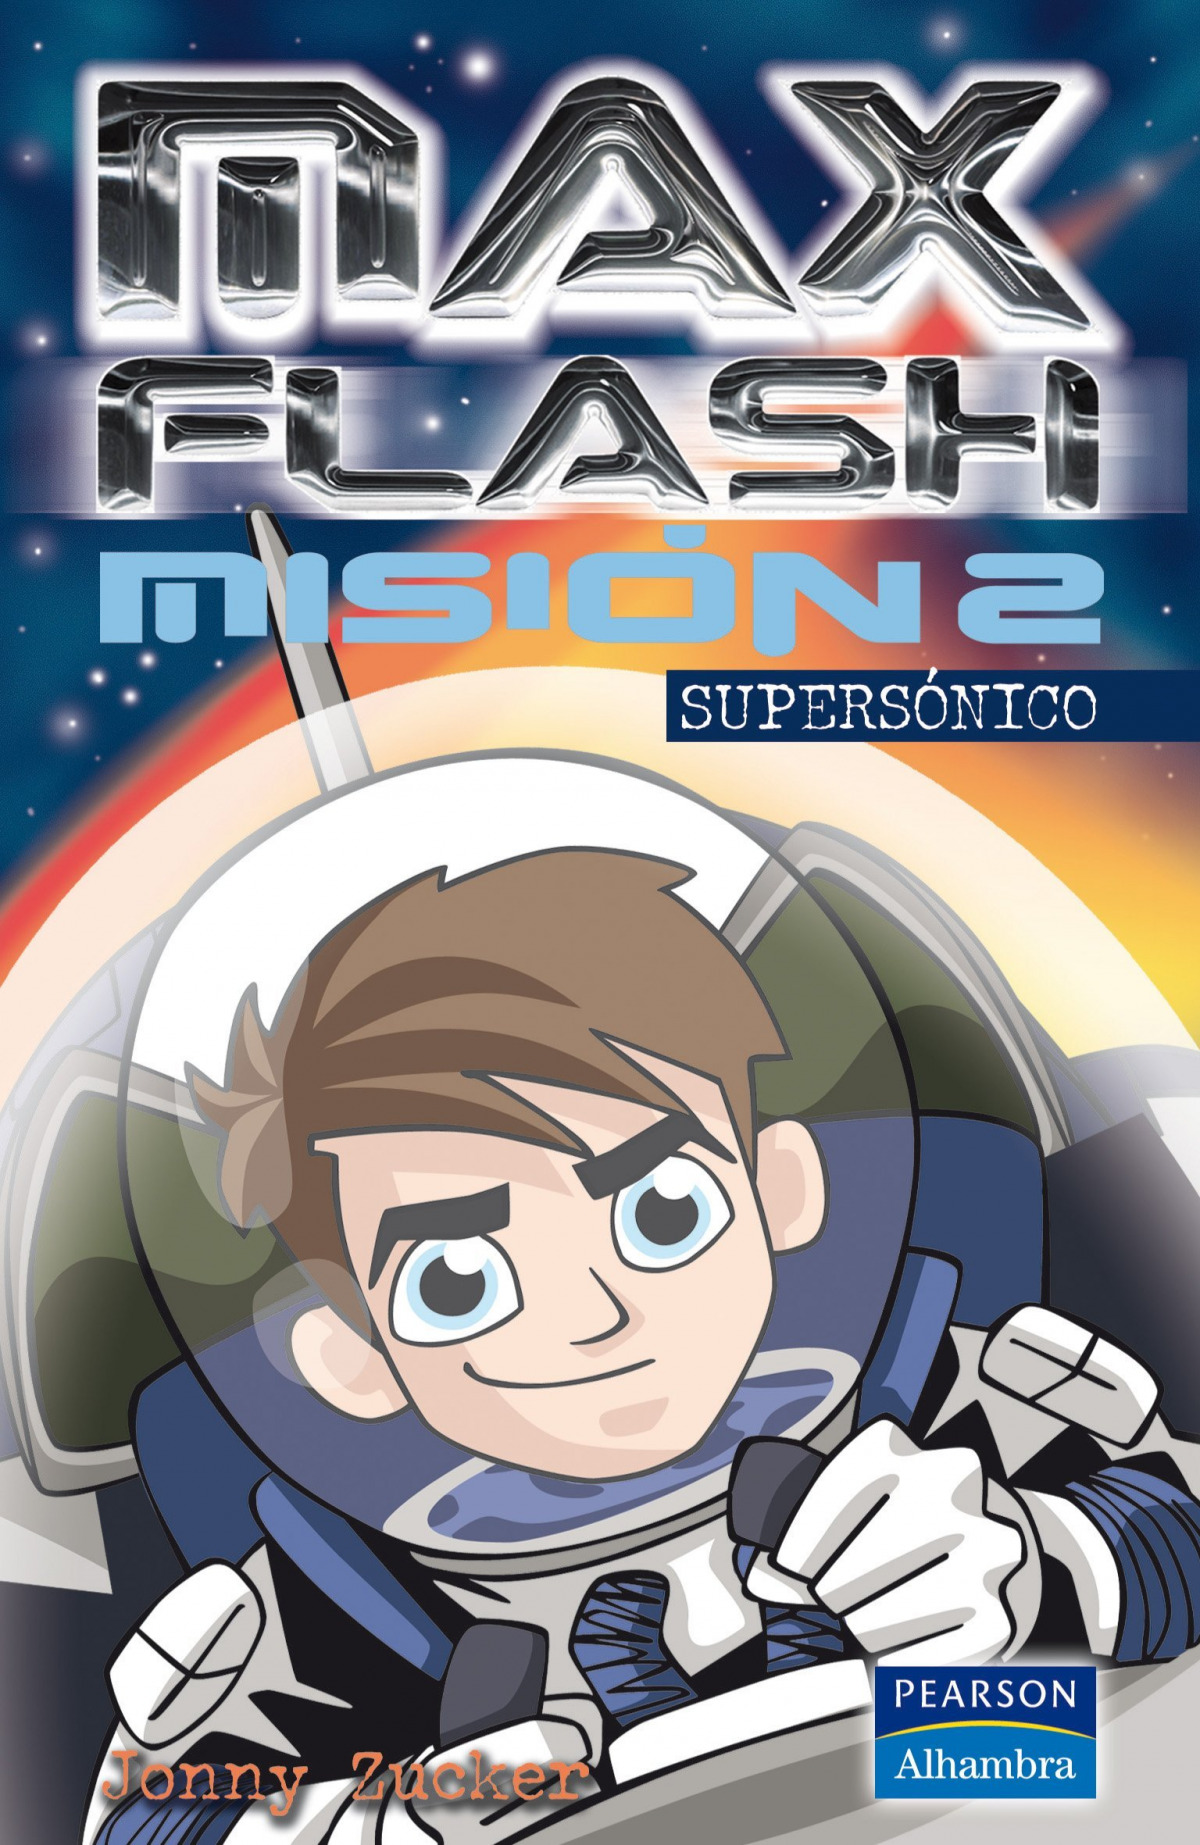 supersónico max flash misión 2 - jonny zucker